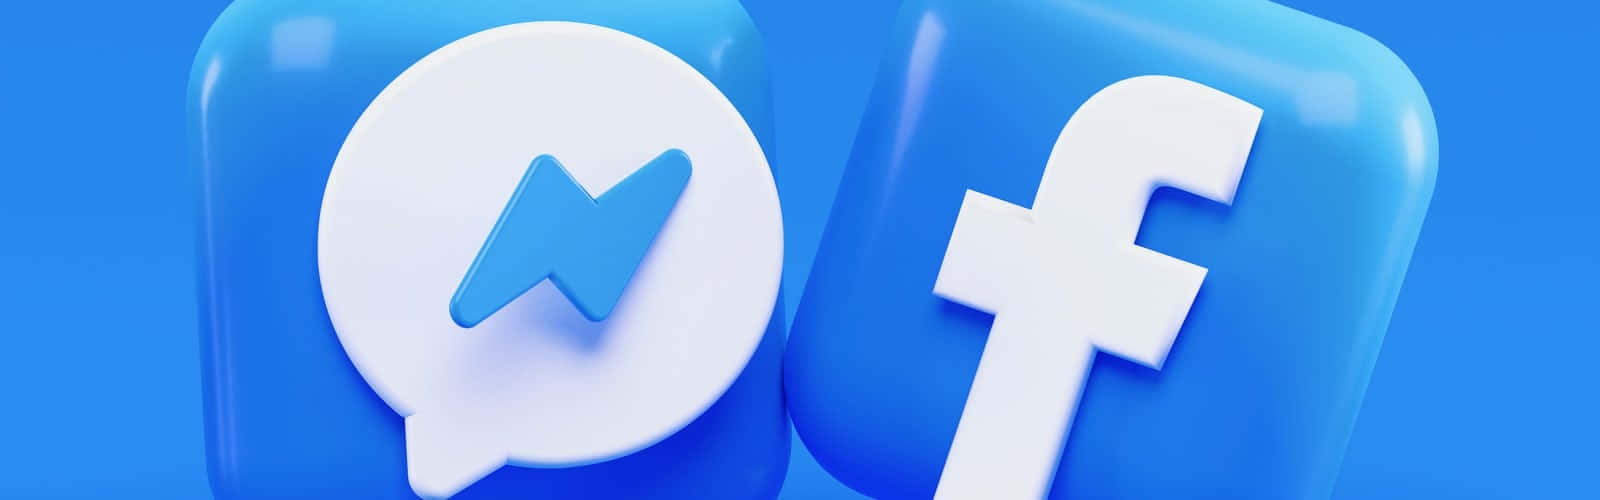 Social Media Icons Facebook Messenger Blue Aesthetic Wallpaper